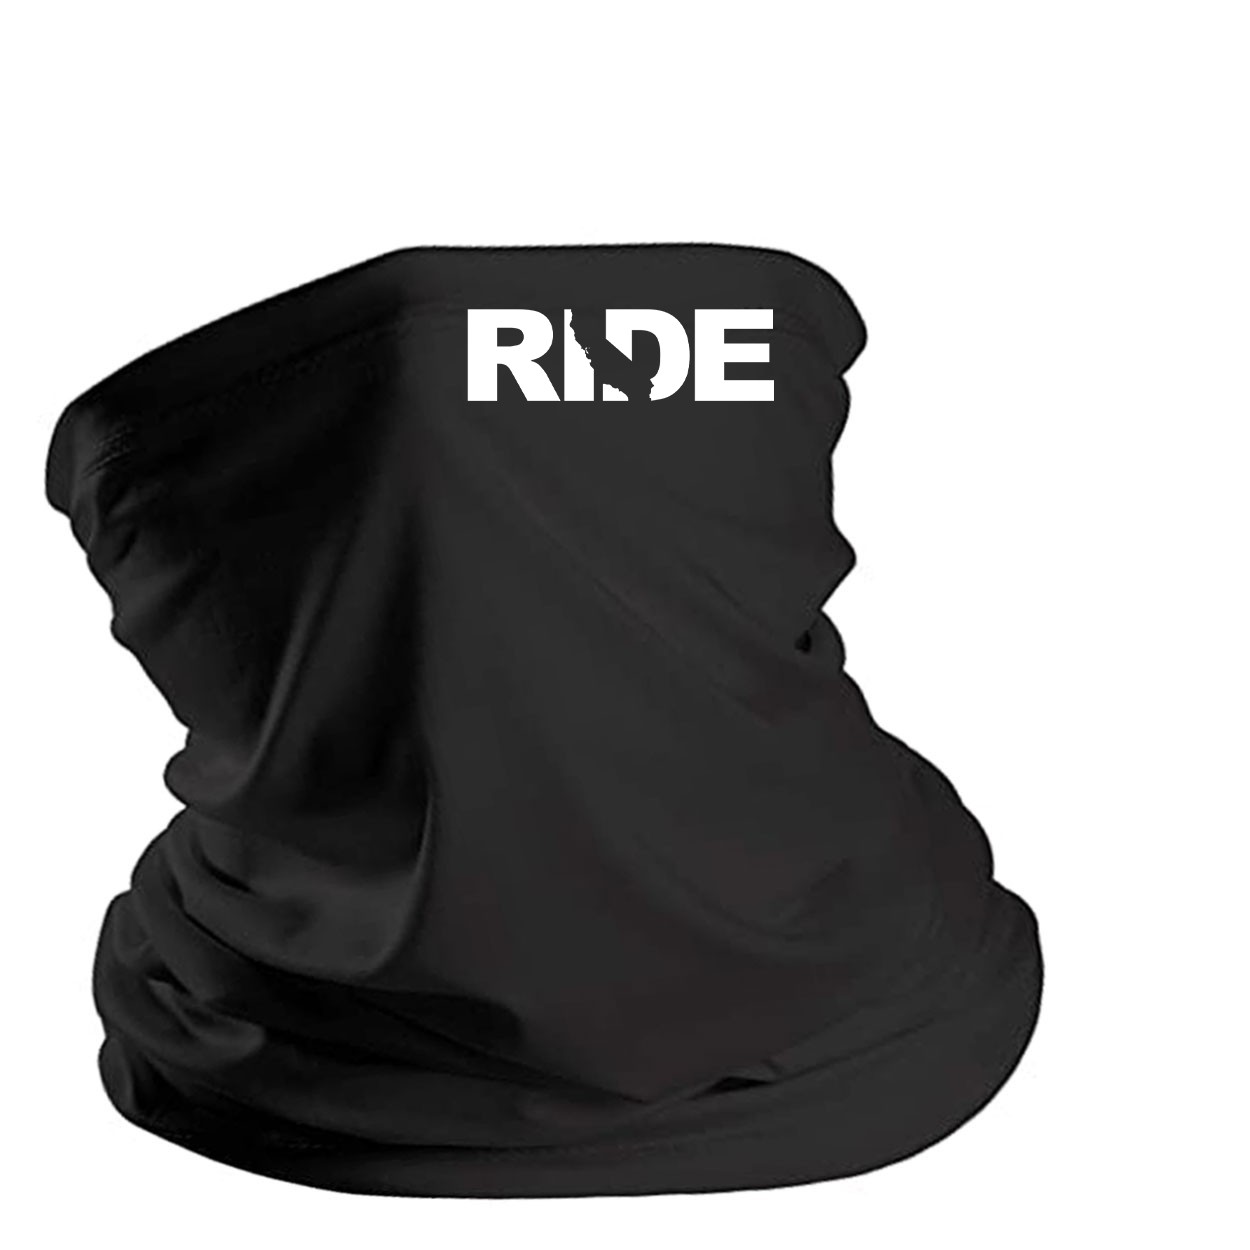 Ride California Night Out Lightweight Neck Gaiter Face Mask Black (White Logo)